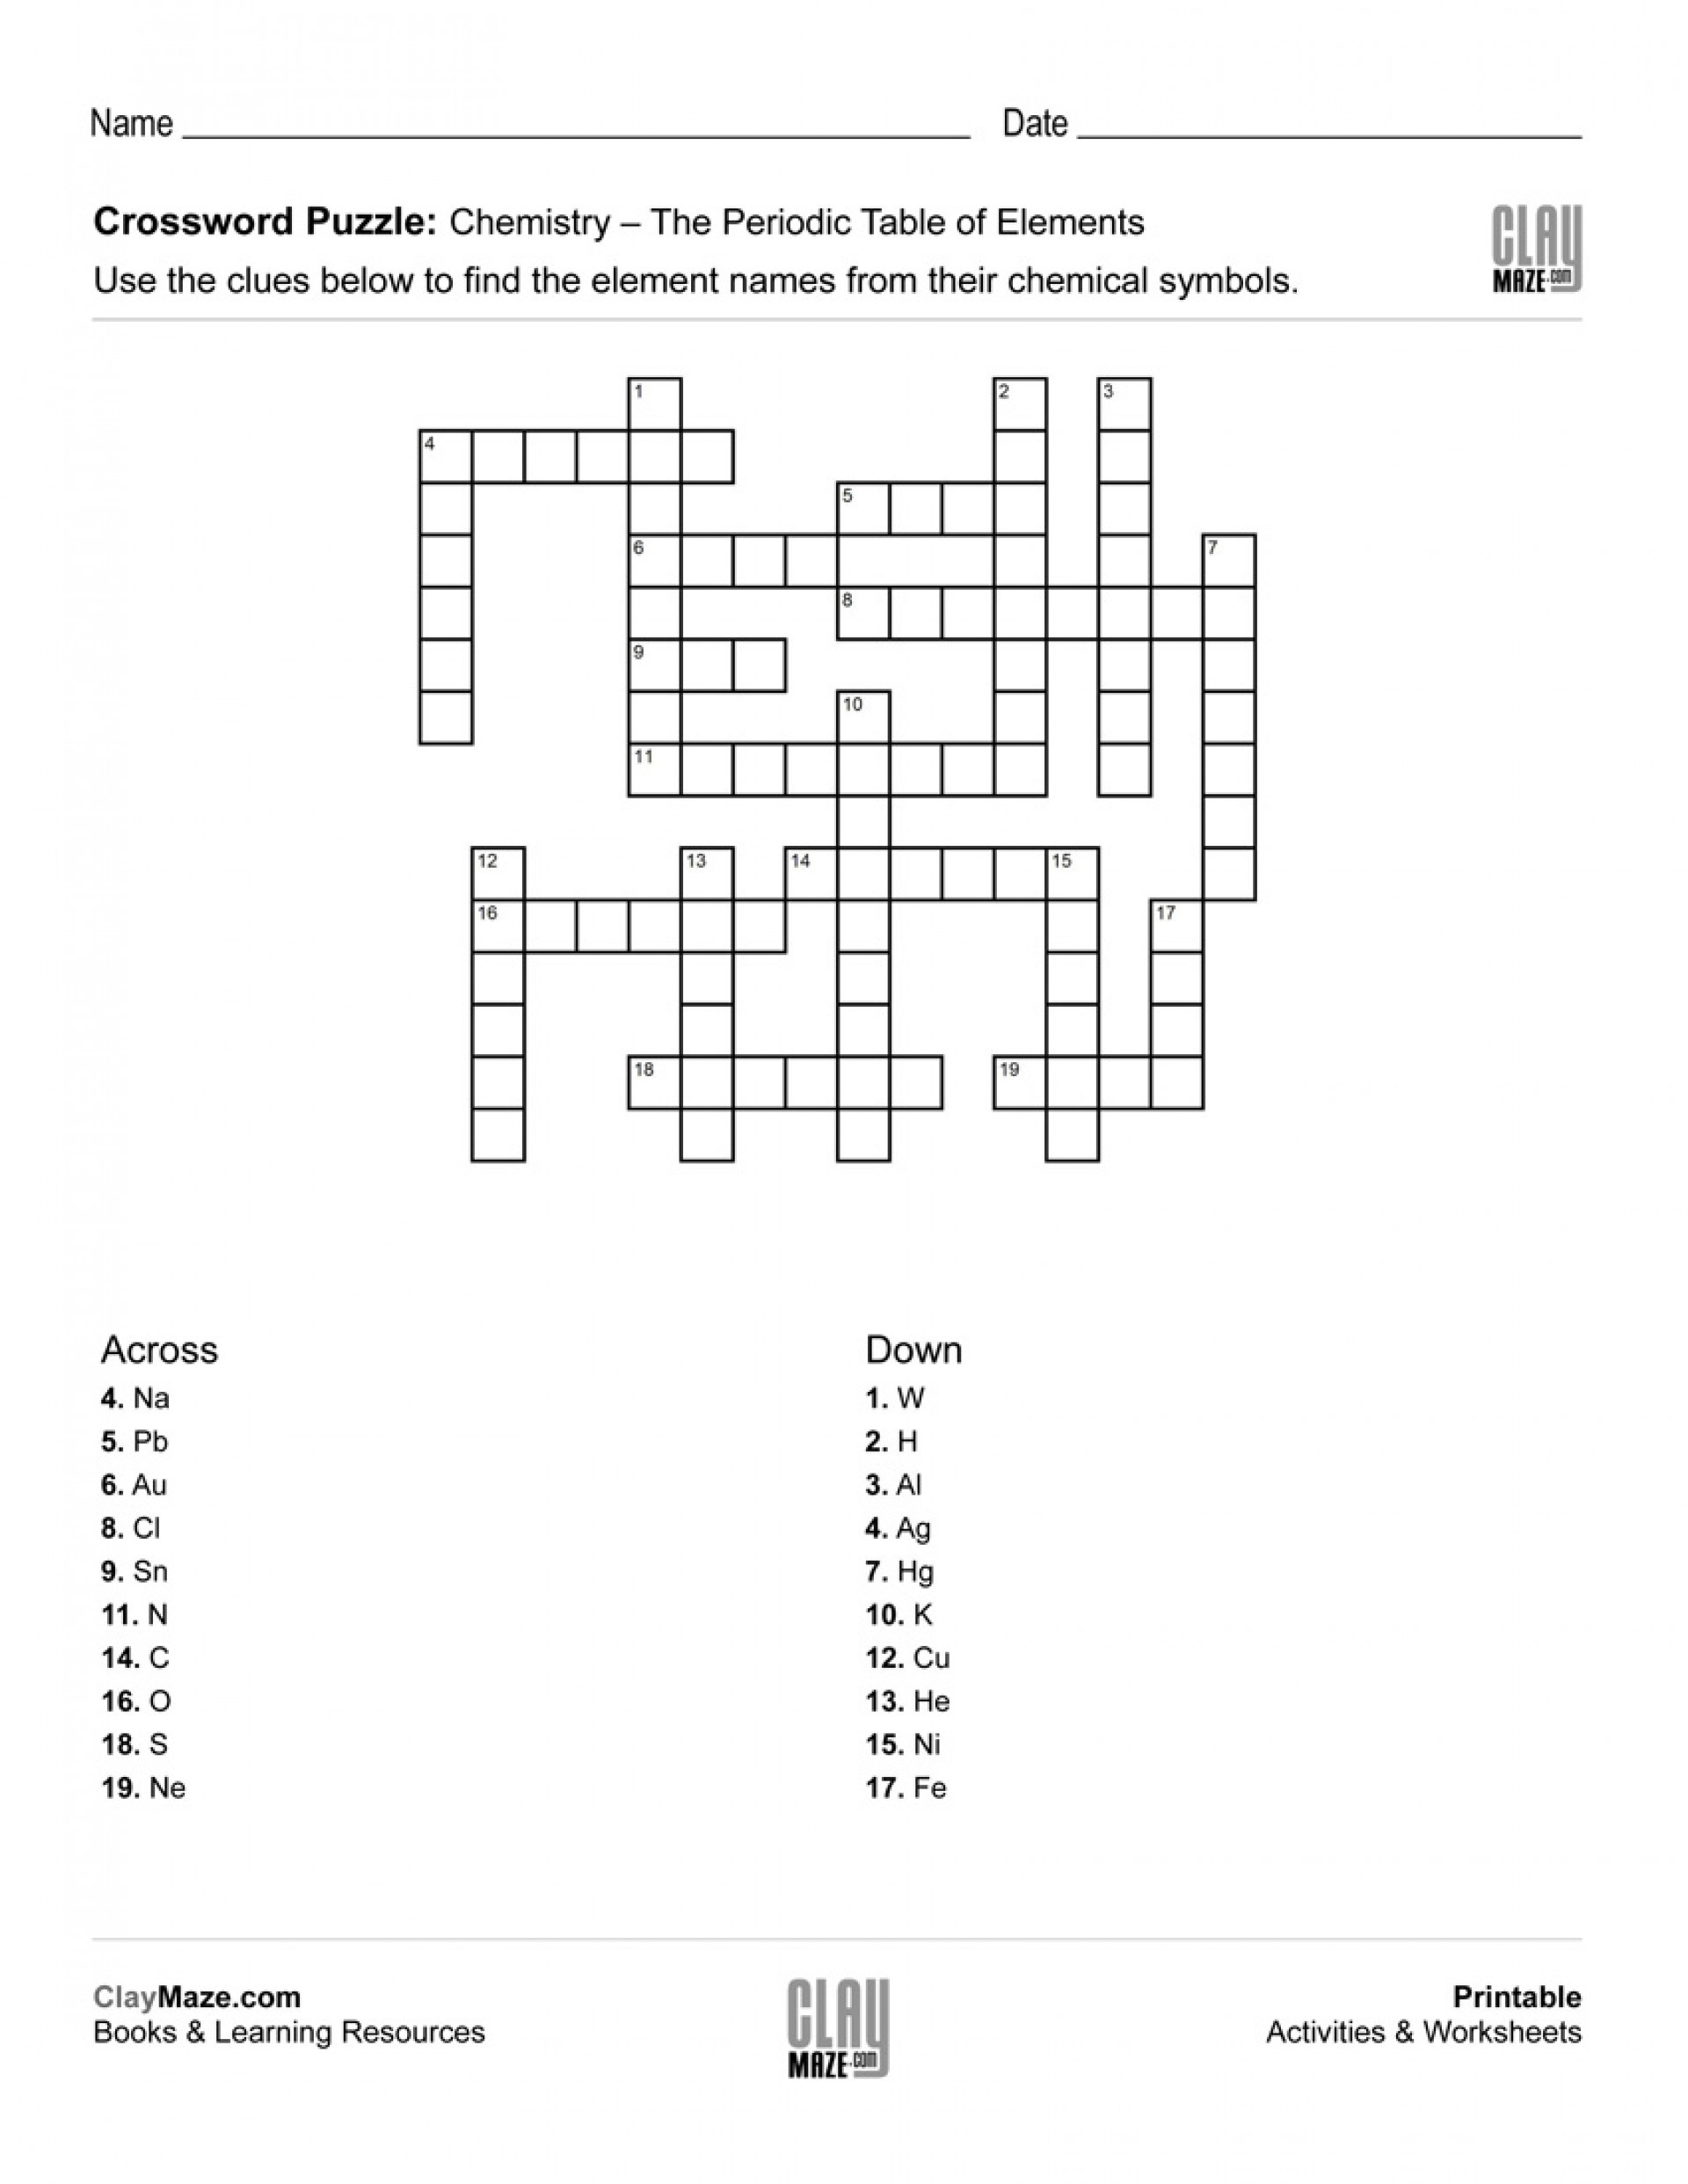 Periodic Table Crossword Puzzle Pdf New Chemistry Periodic Table - Printable Puzzle Pdf